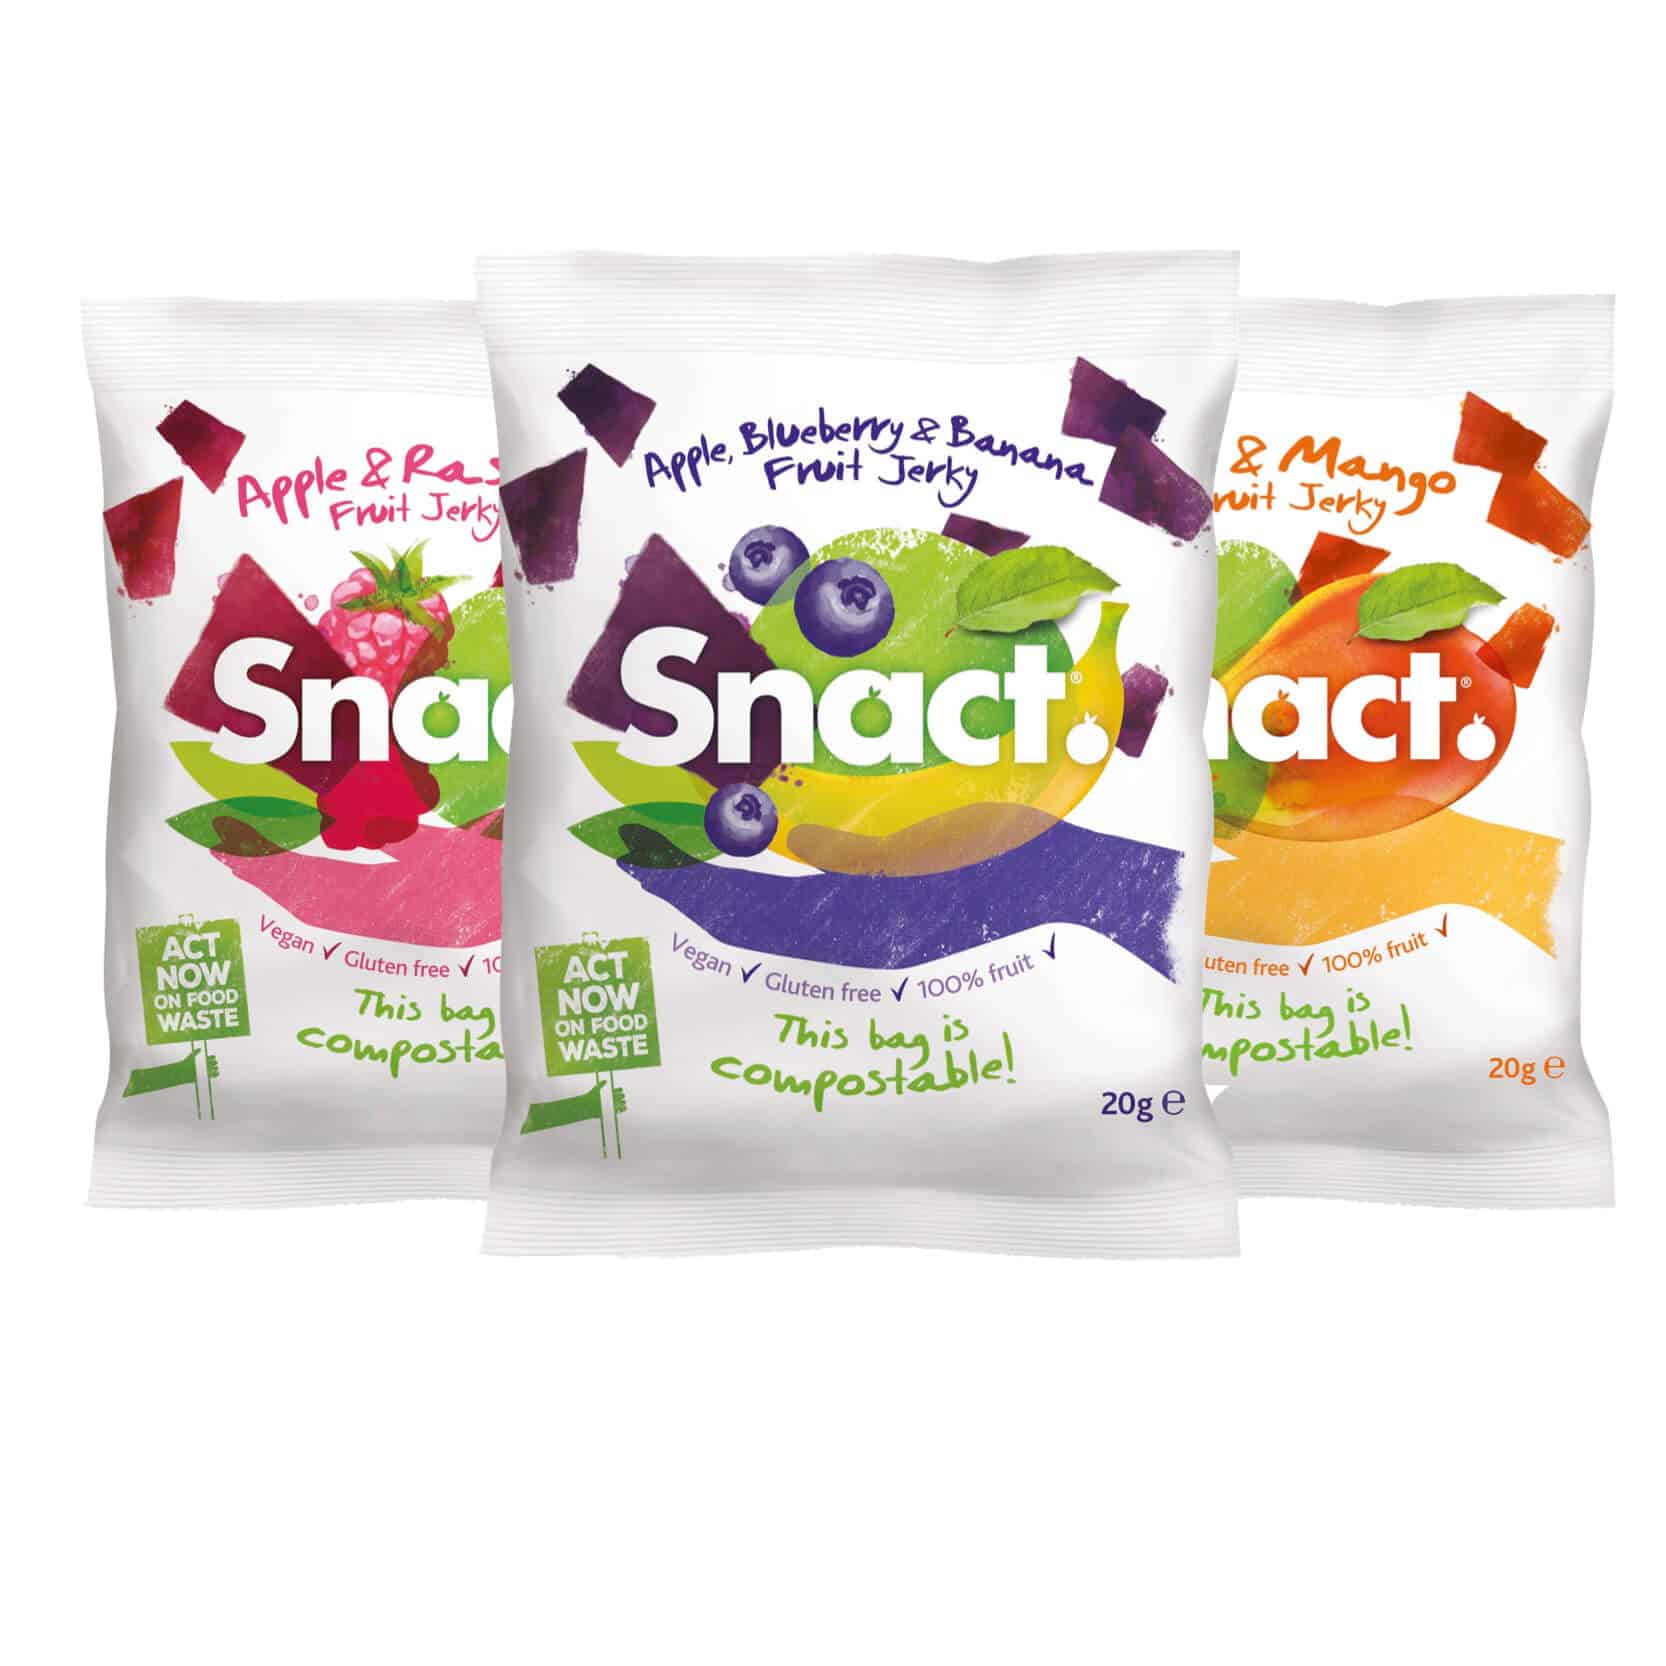 Snact Pillow Bag - 3 flavors